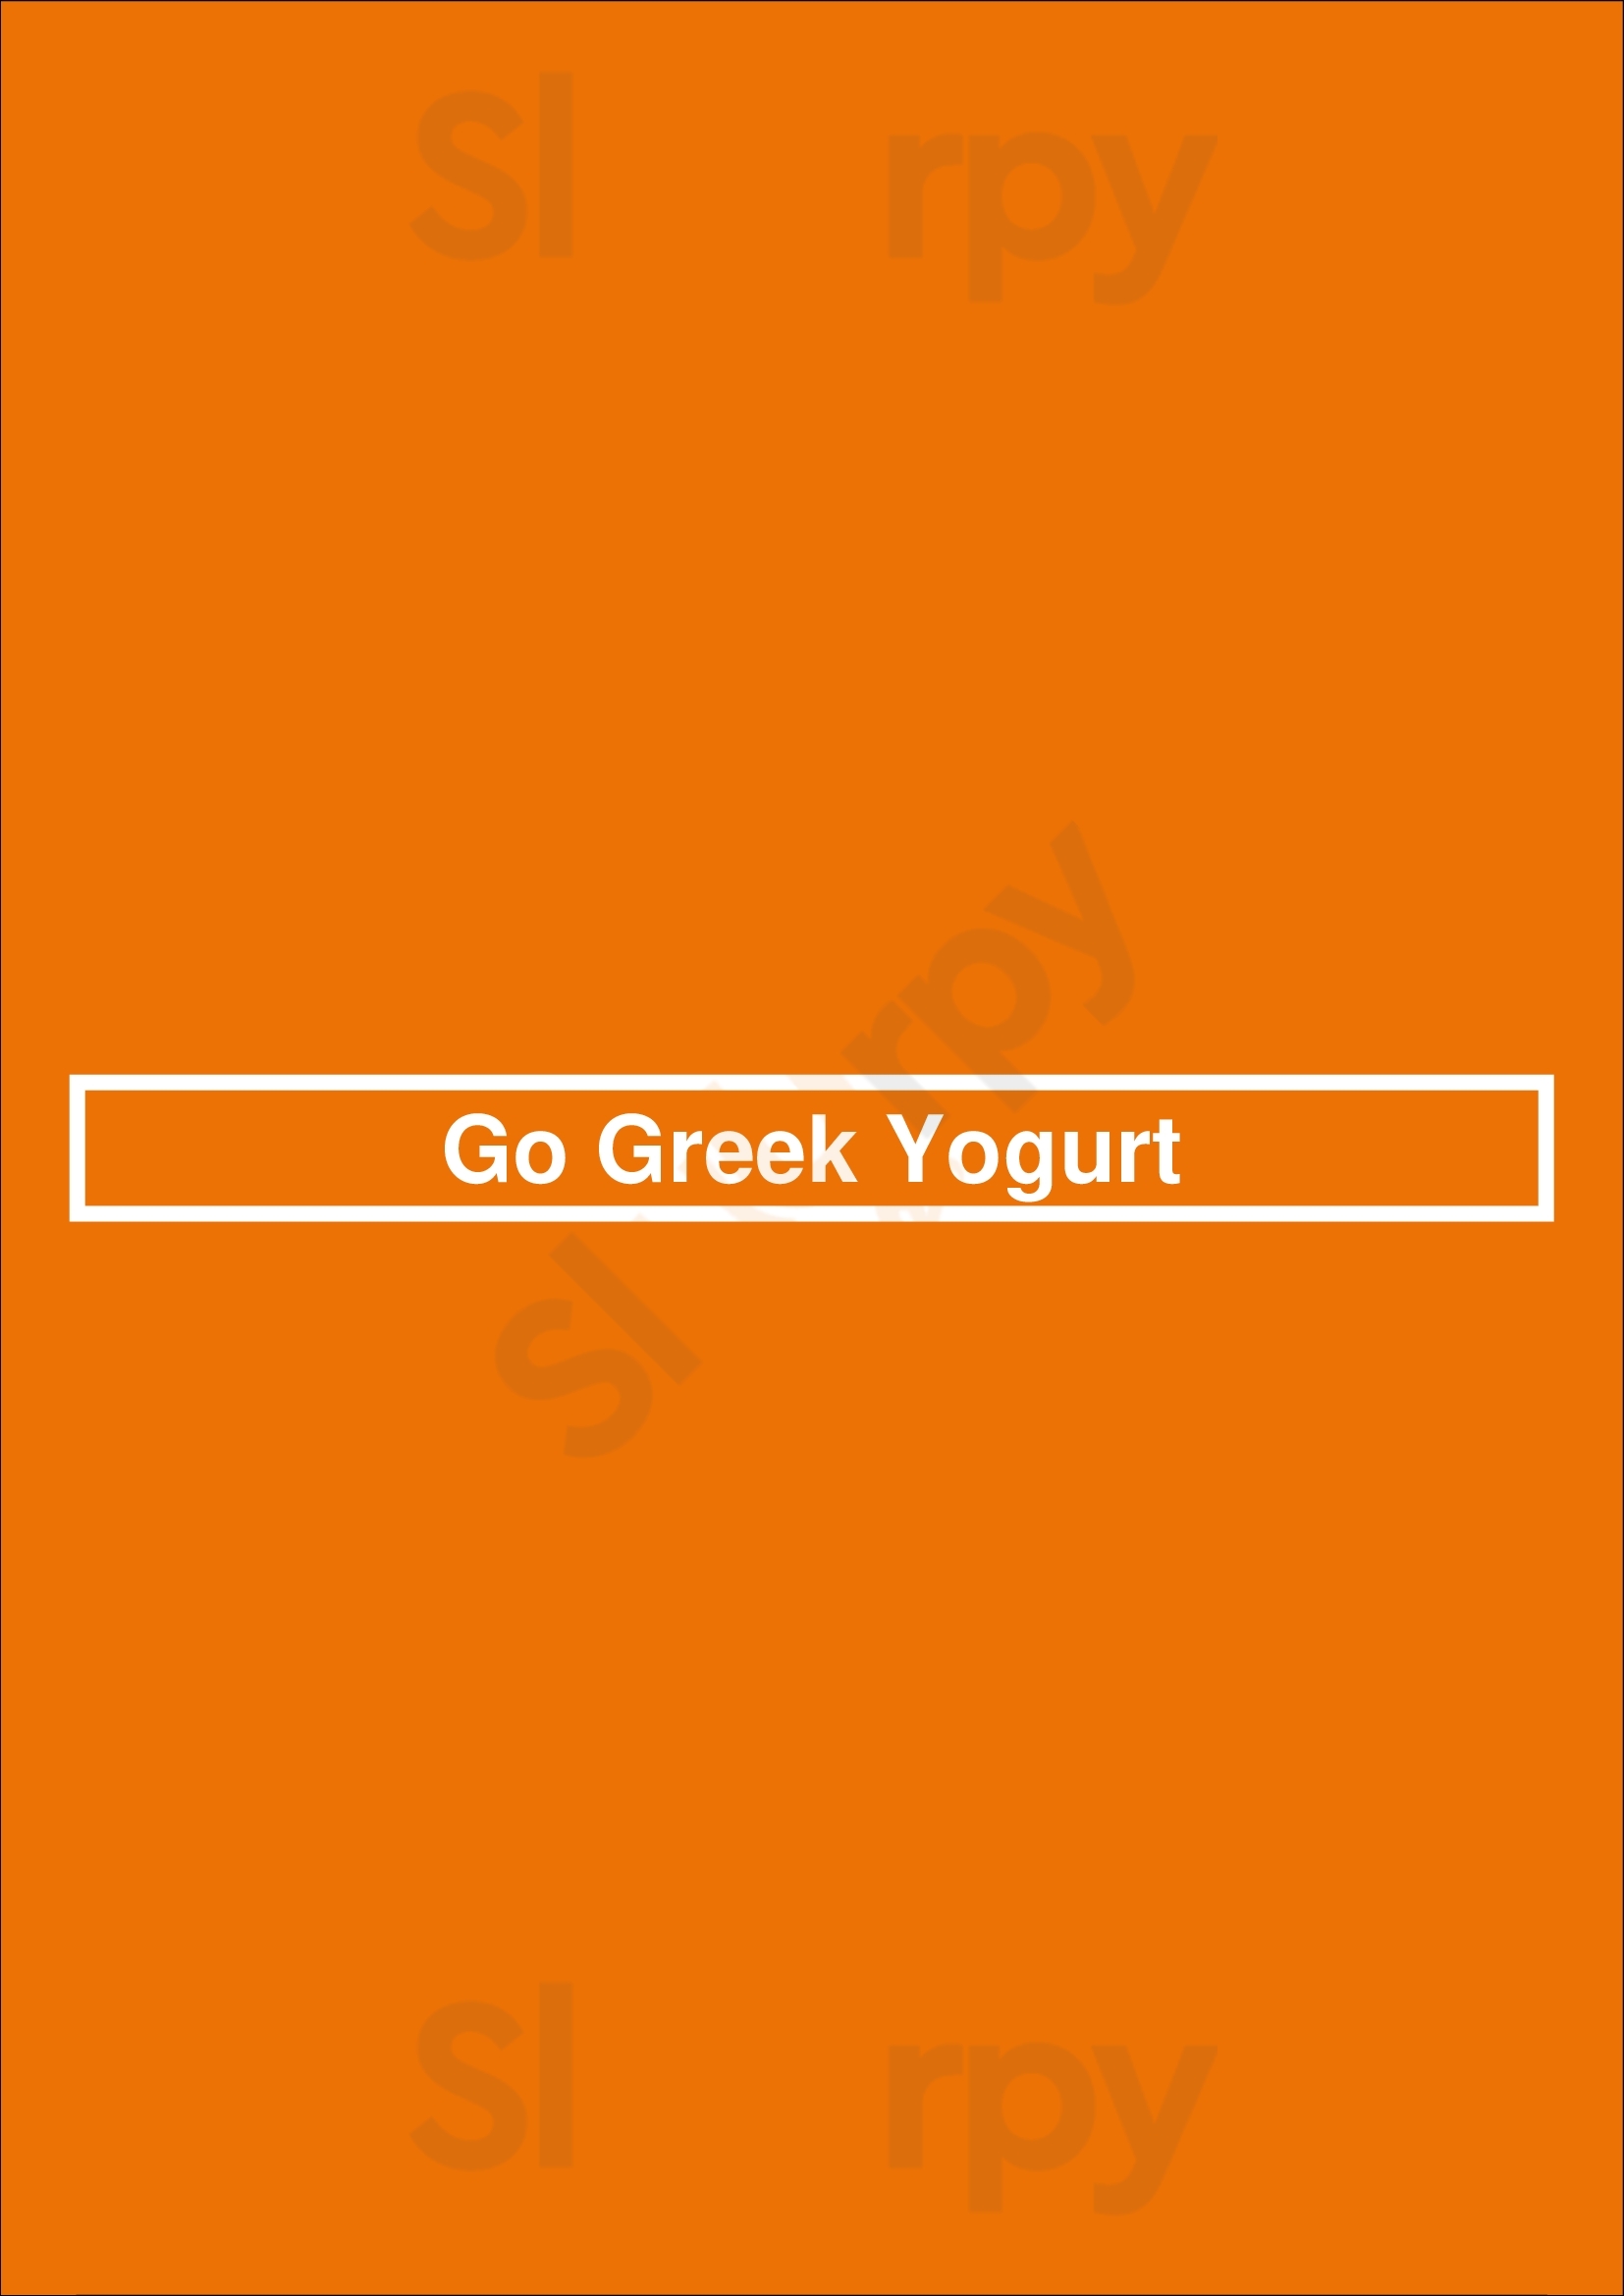 Go Greek Yogurt Los Angeles Menu - 1